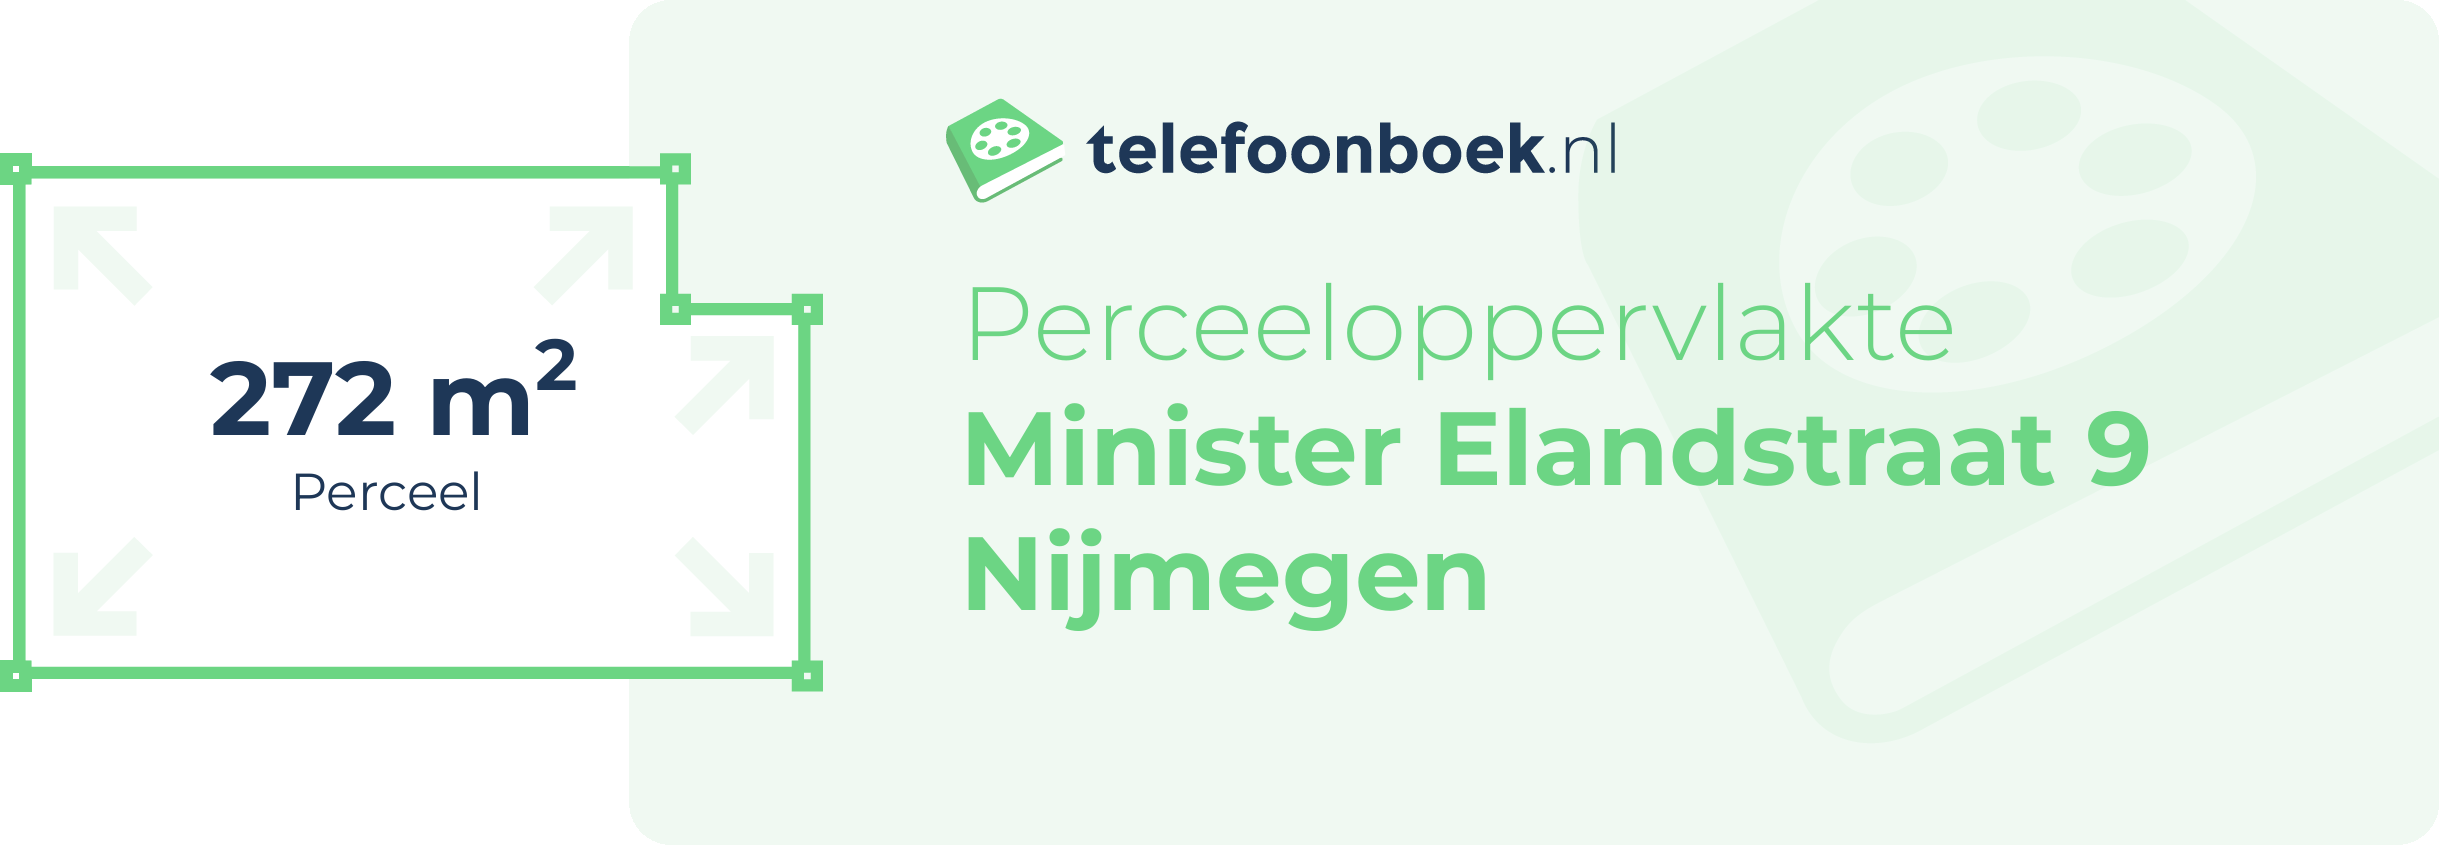 Perceeloppervlakte Minister Elandstraat 9 Nijmegen